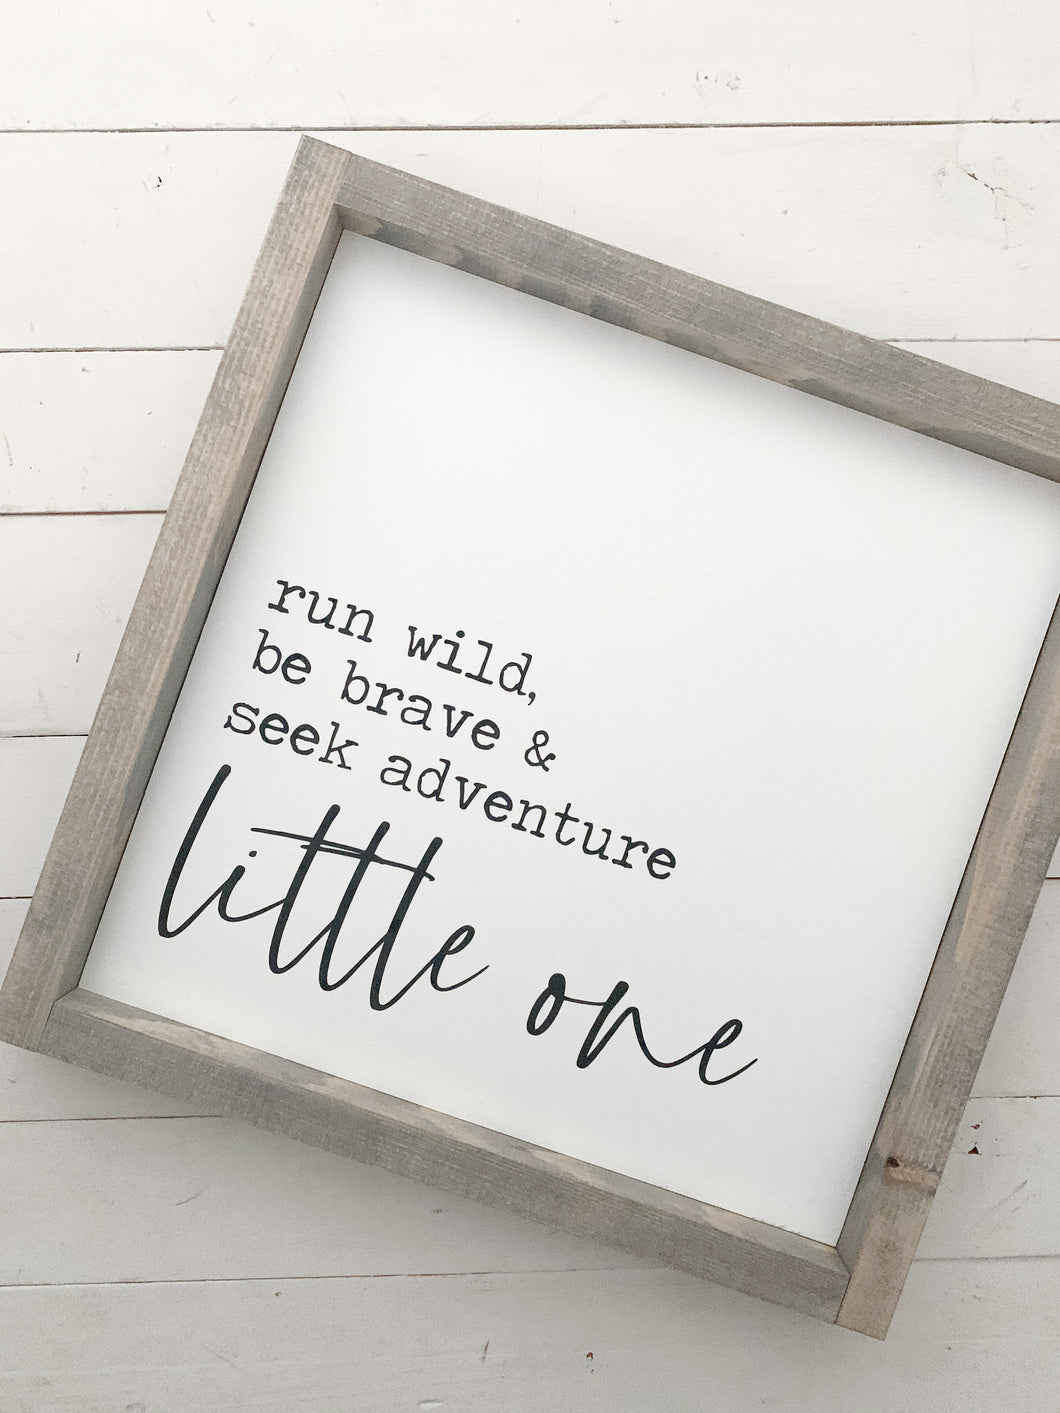 Run wild, be brave & seek adventure little one